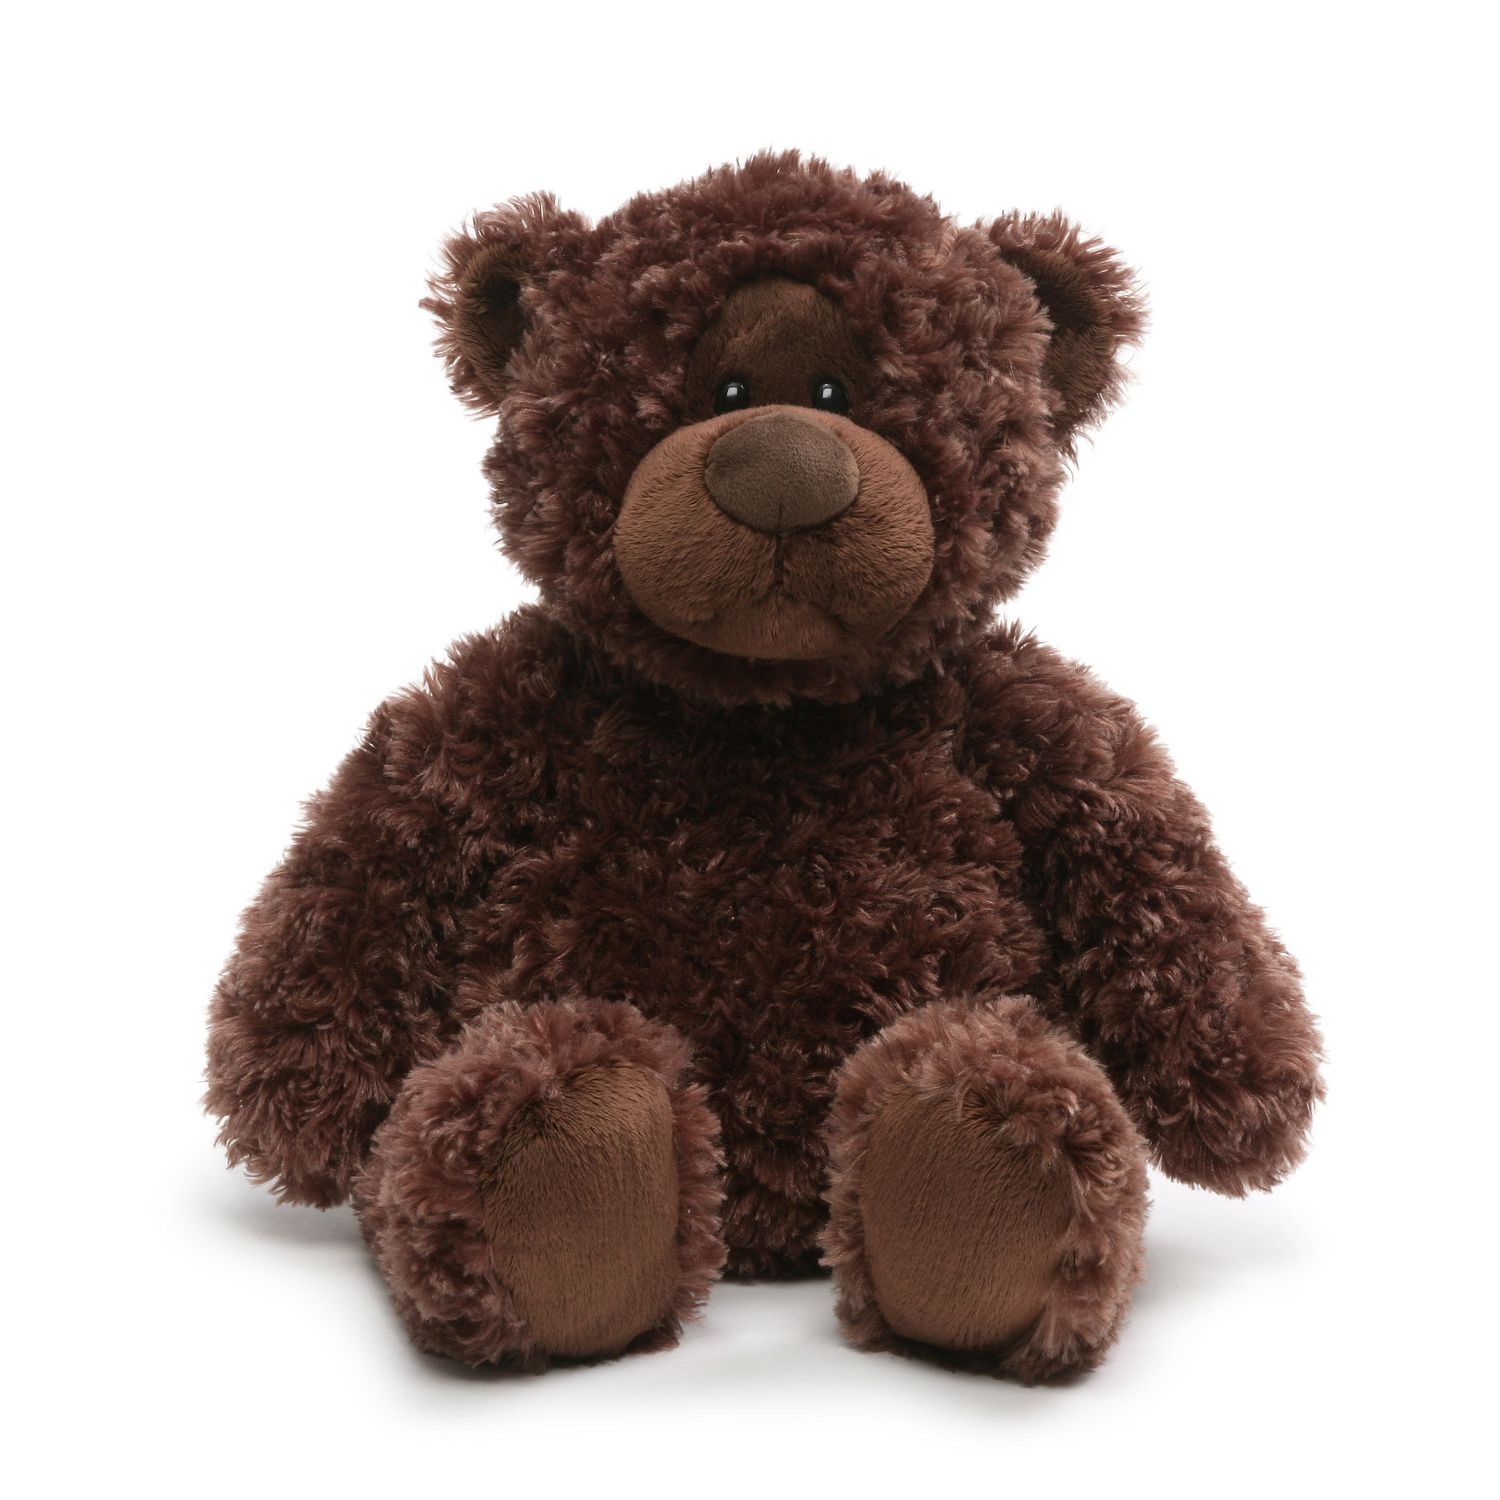 G By Gund Teddy Bear Plush Stuffed Animal Chocolate Brown 13” Walmart